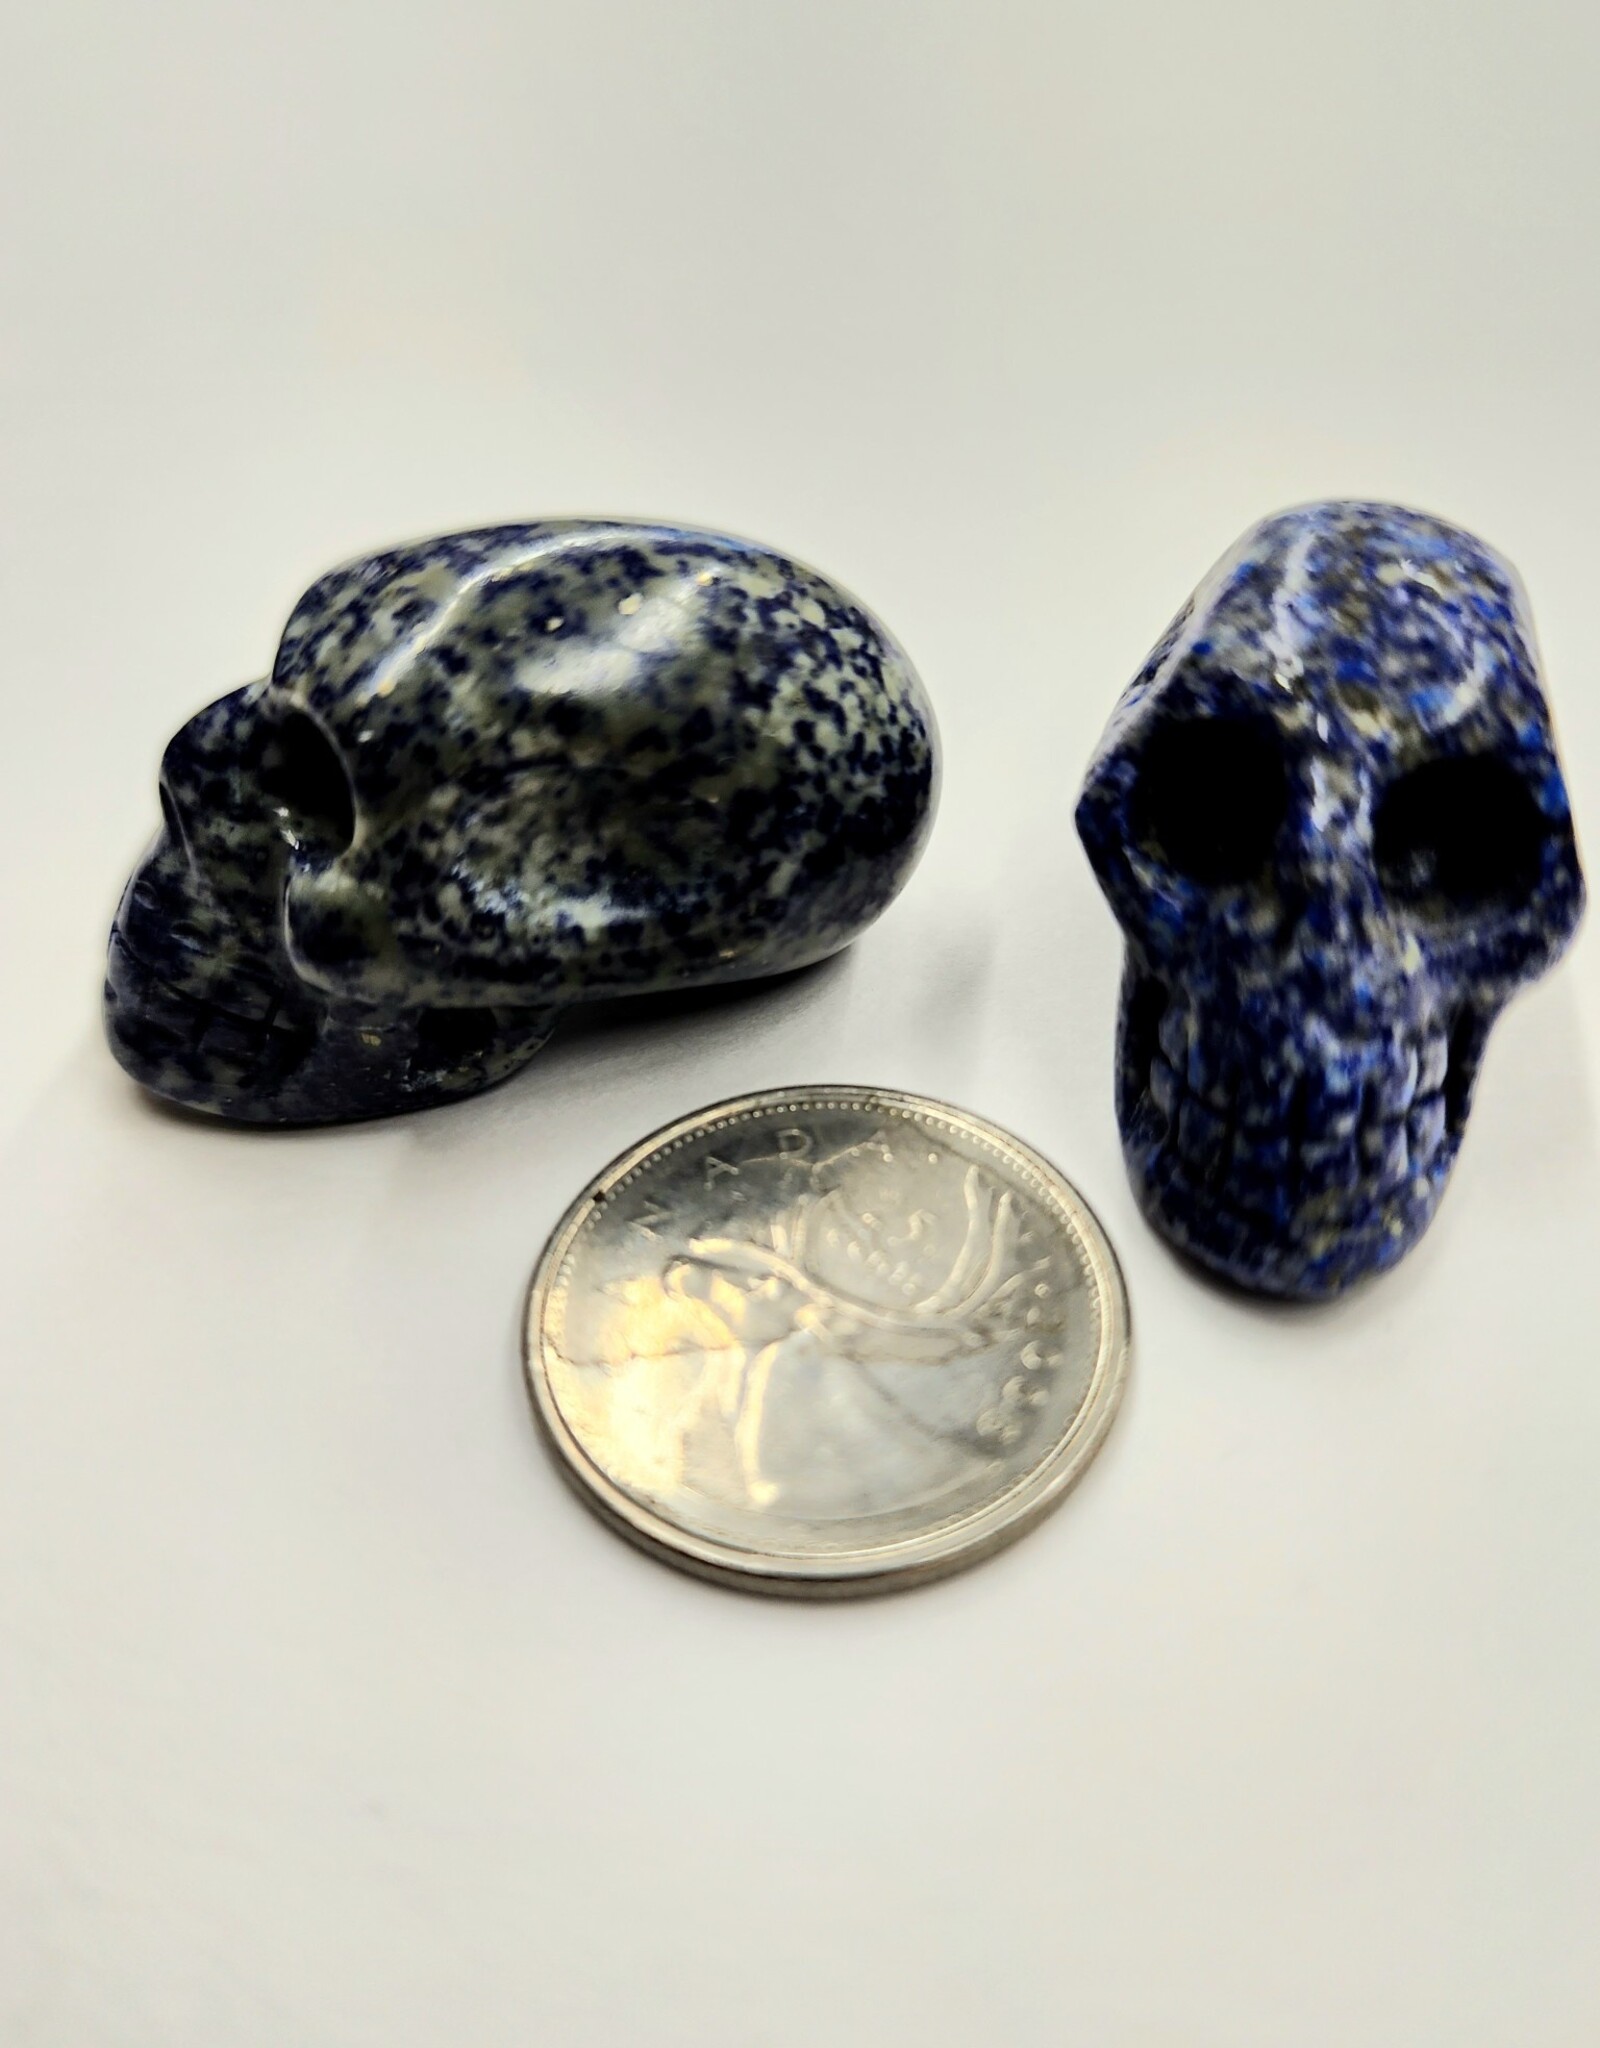 Elongated Alien Skulls Lapis Lazuli